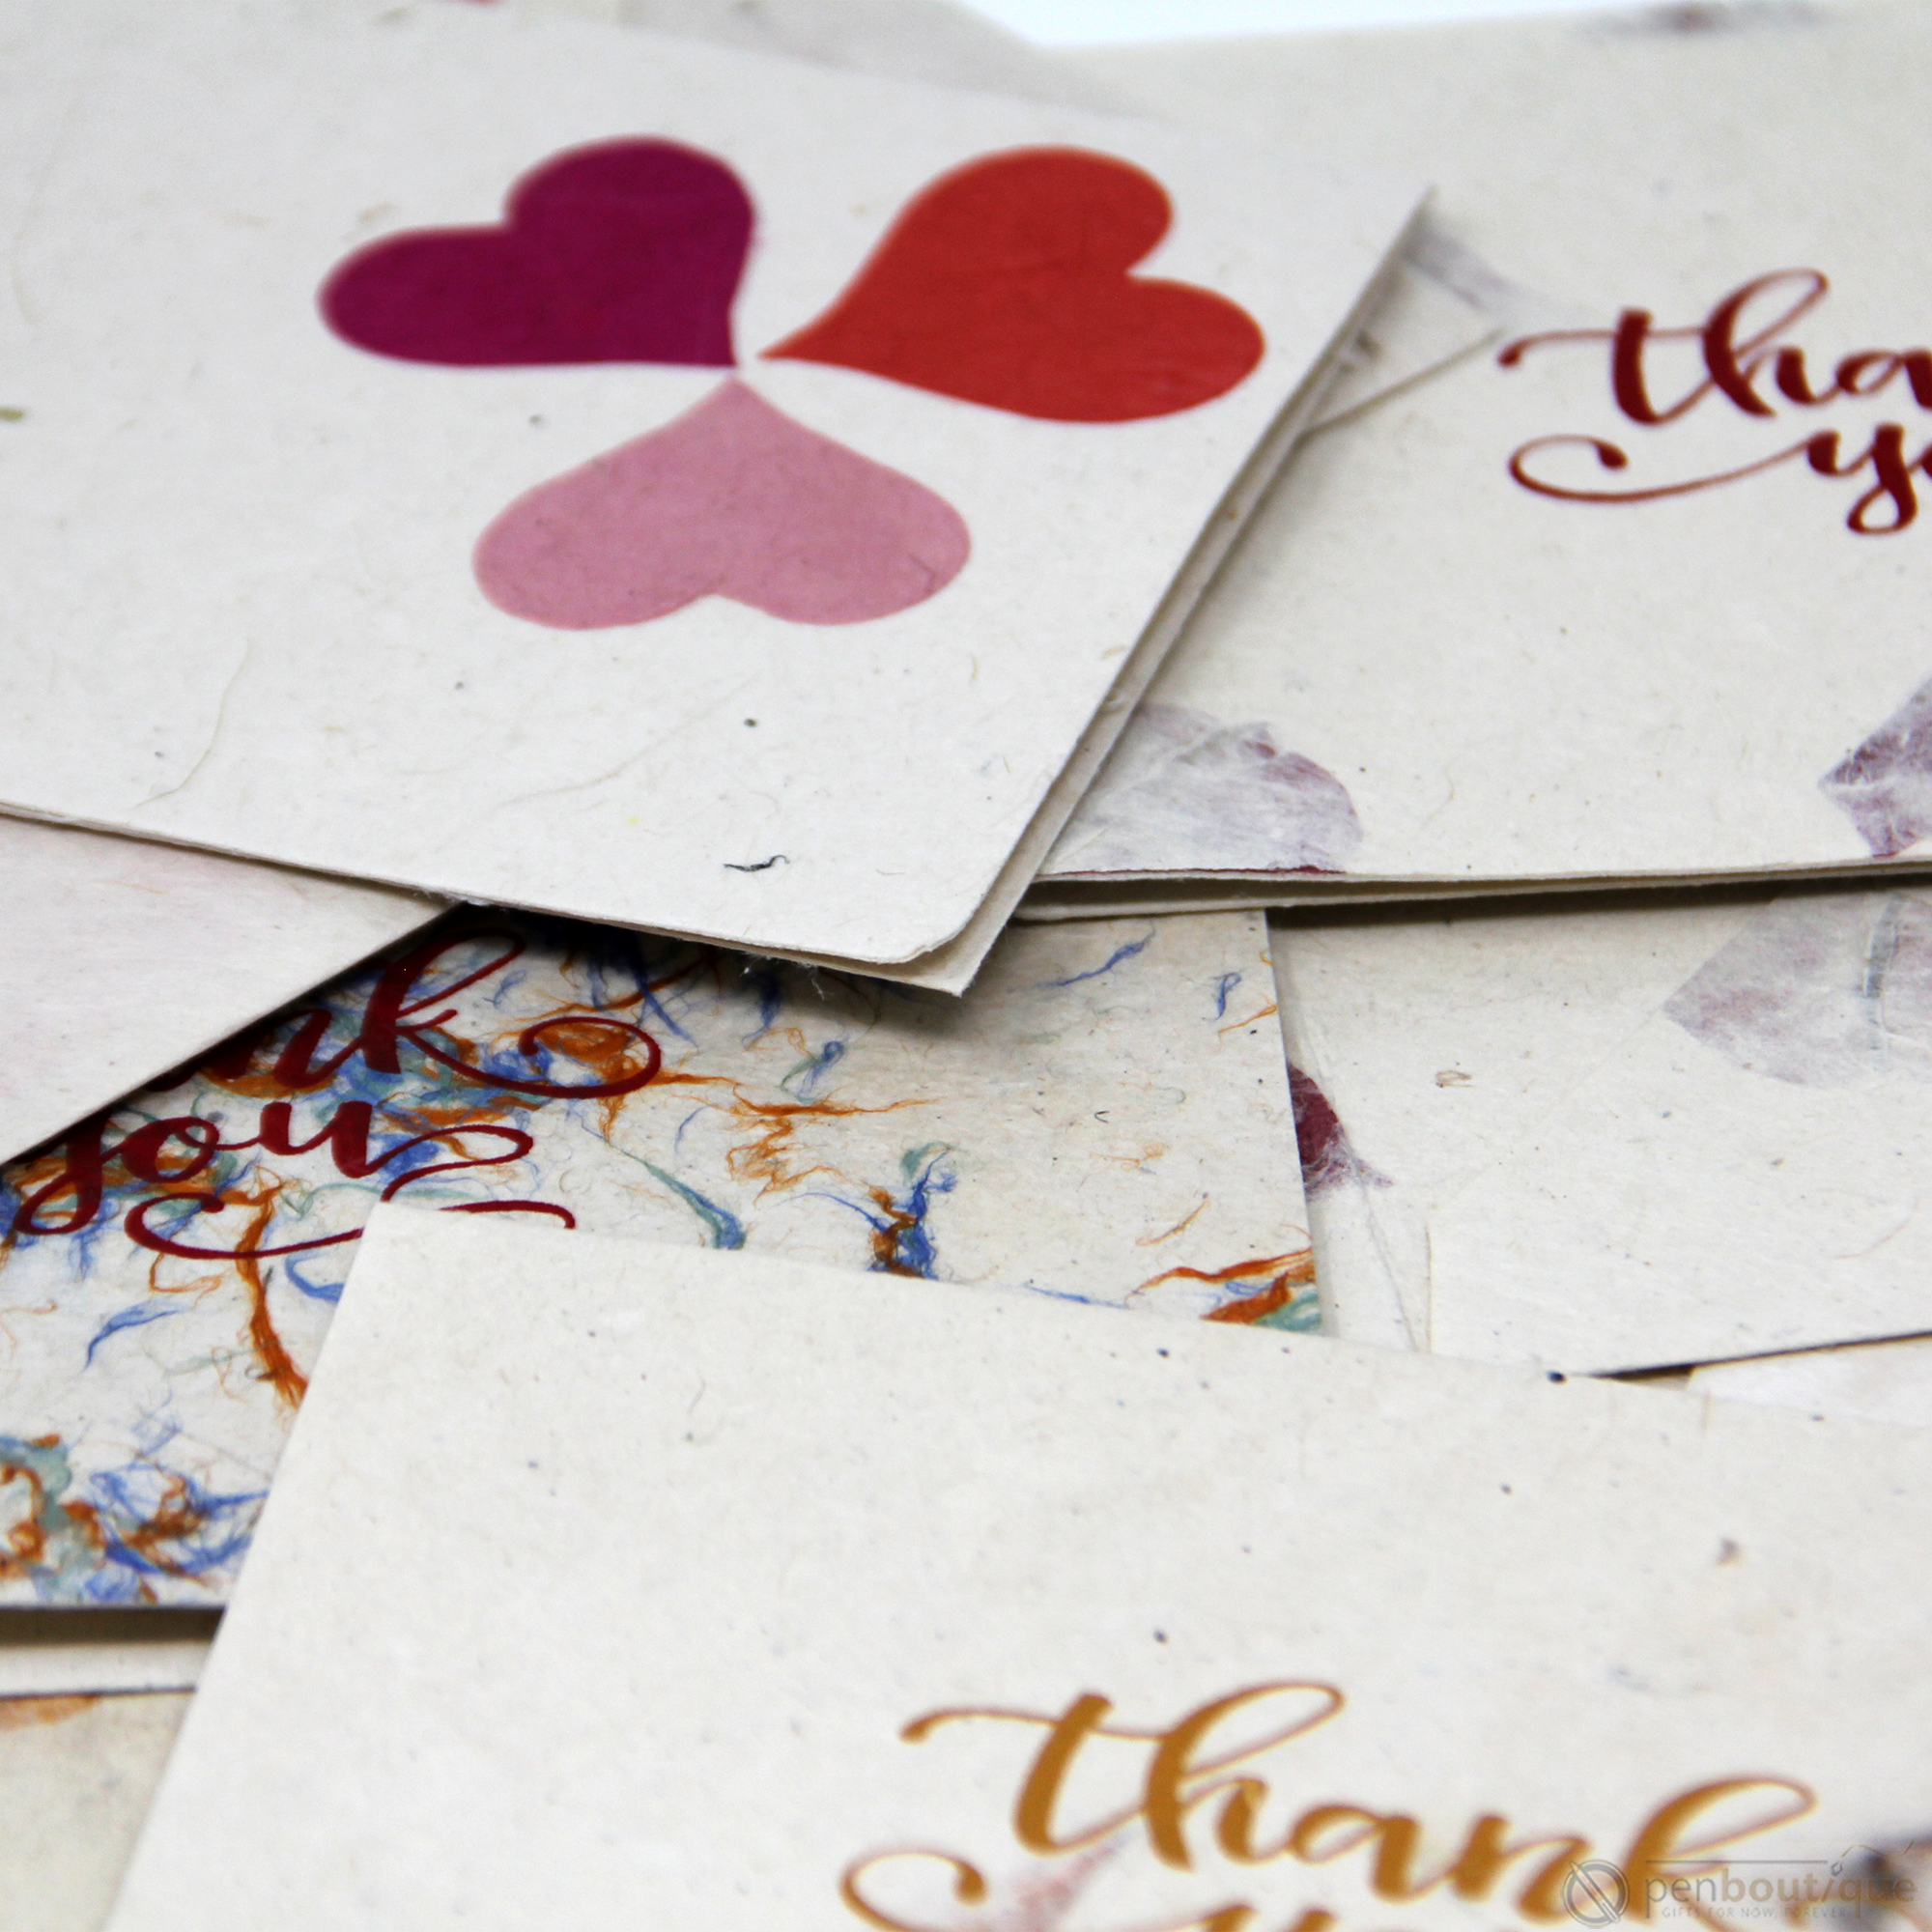 Monk Paper Thank You Note with Rose Petal Envelope - pack of 12-Pen Boutique Ltd